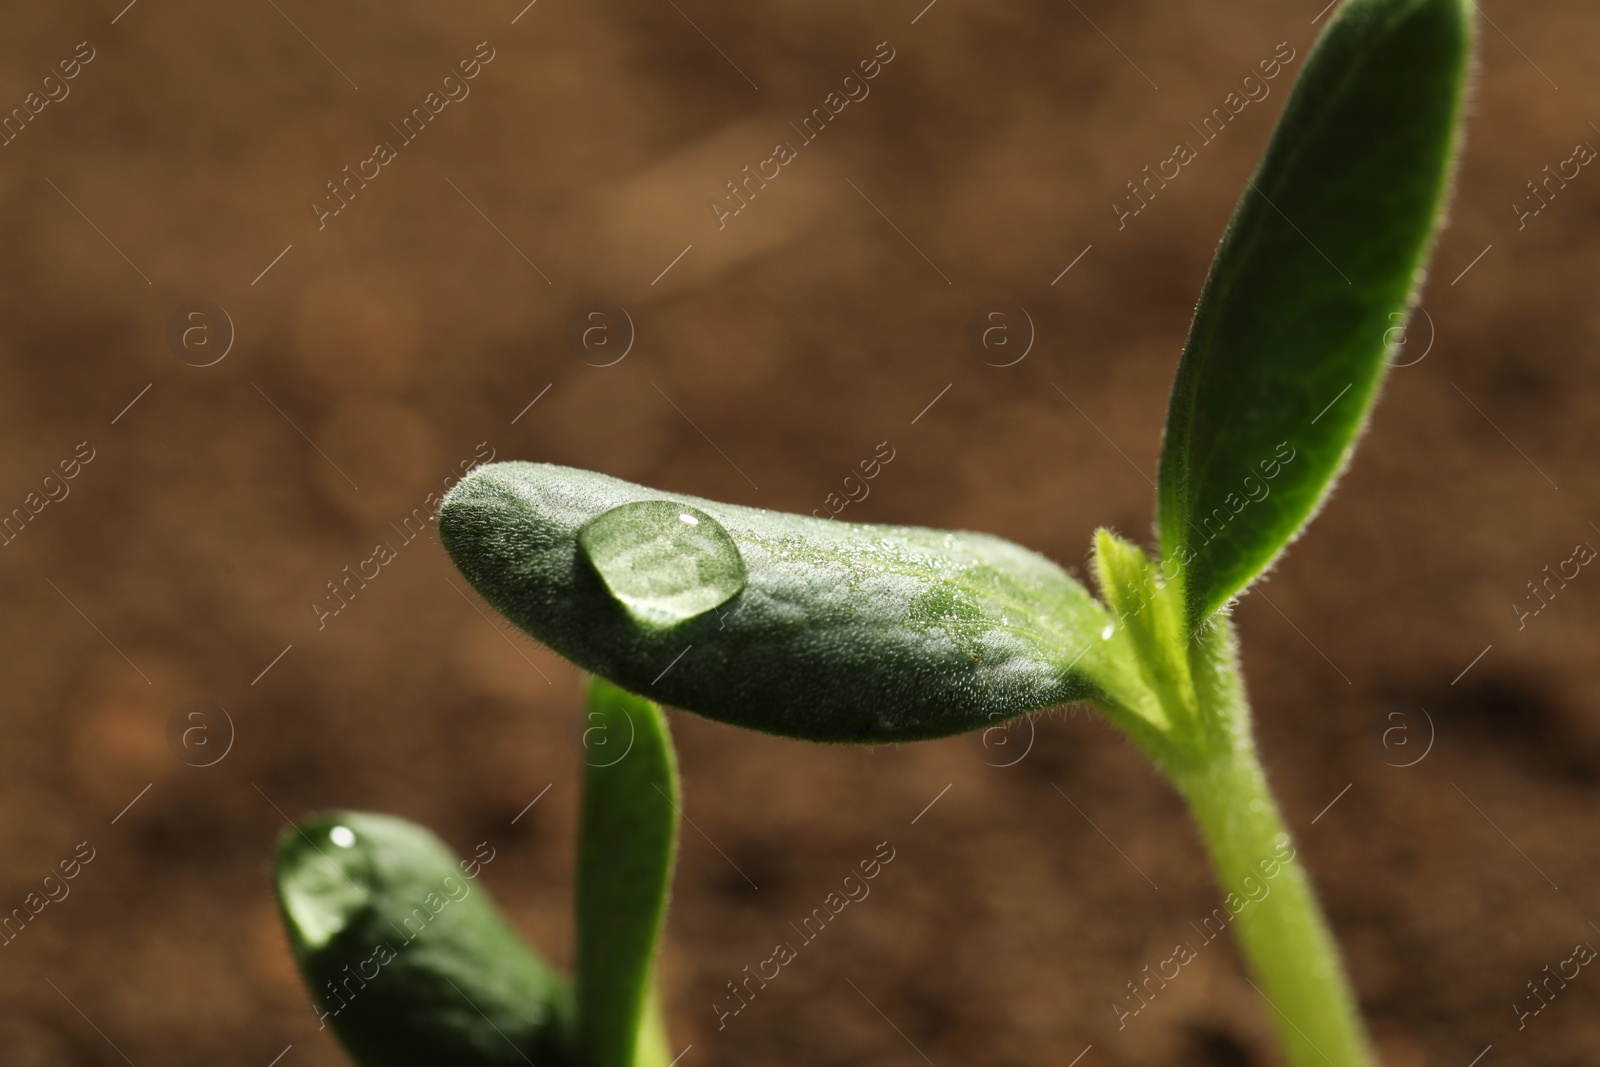 Photo of Little green seedlings growing in soil, closeup view